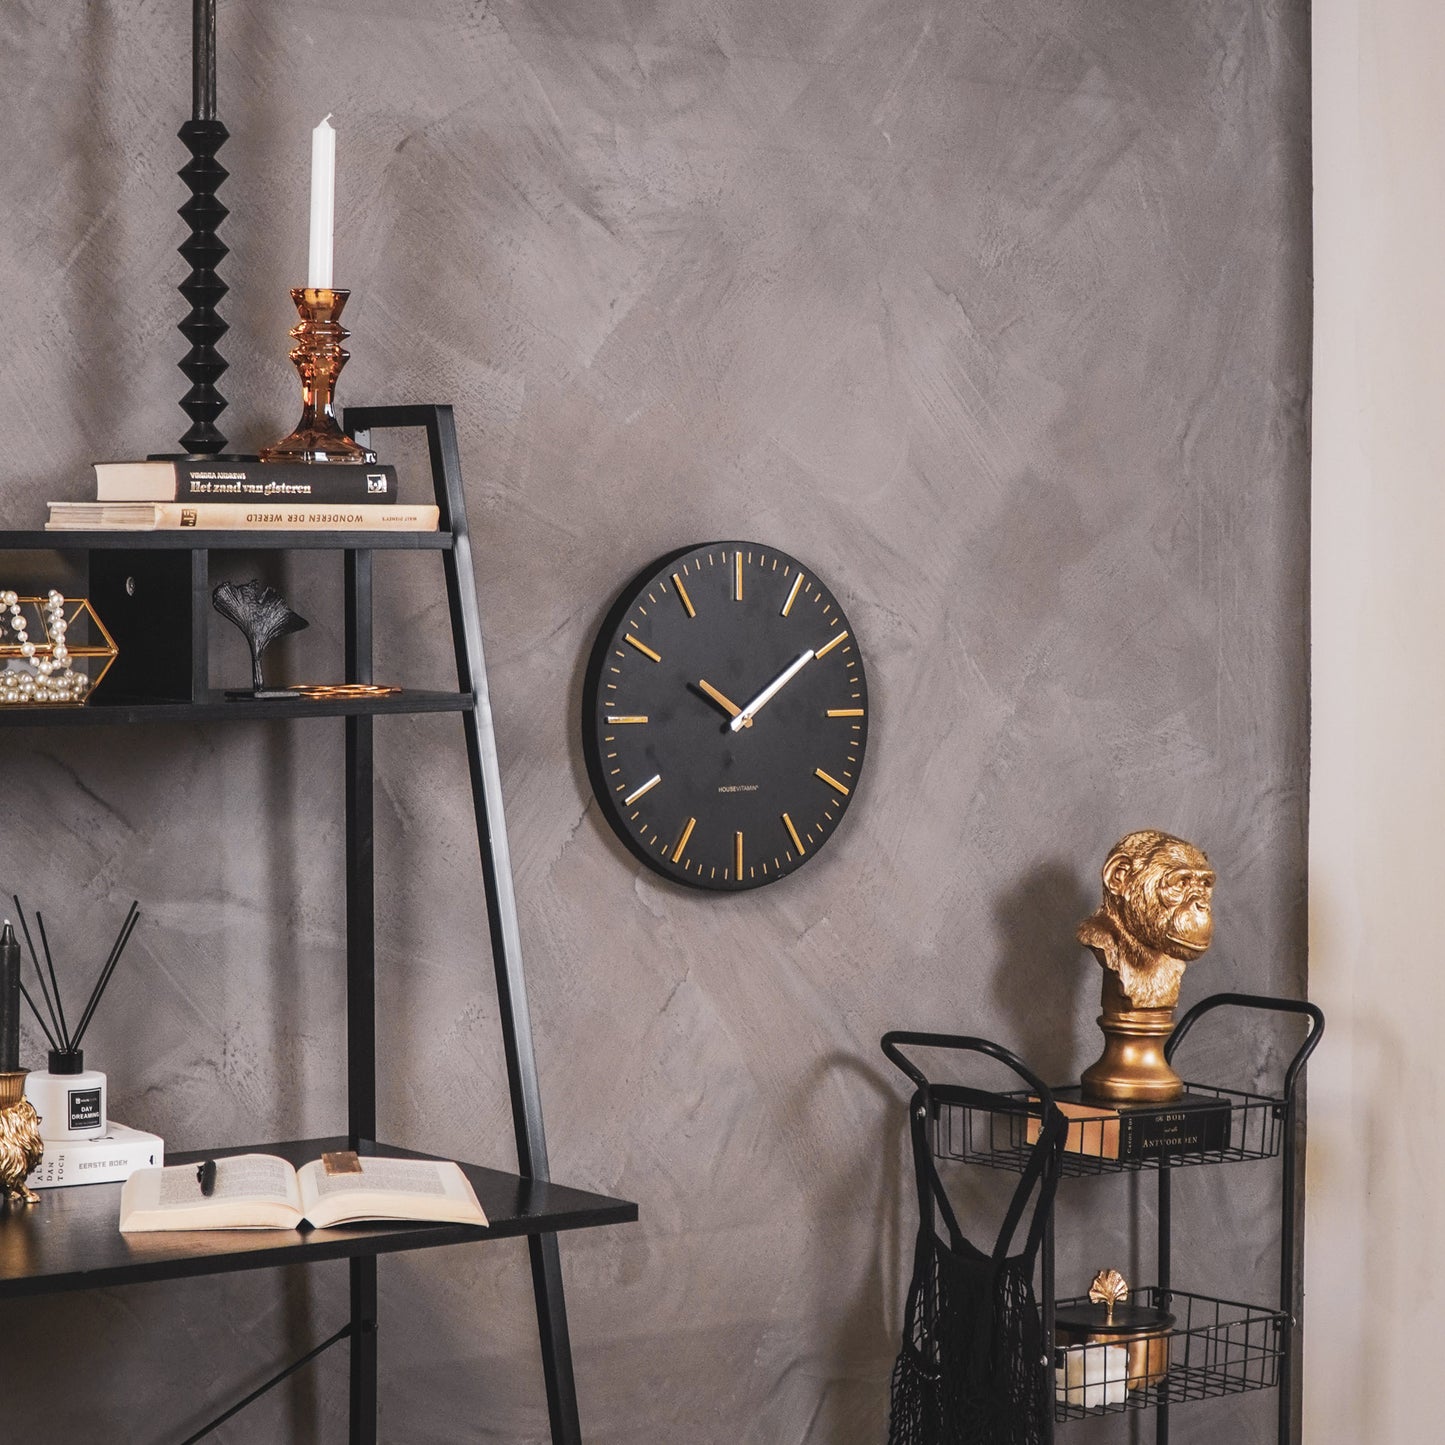 HV Clock Modern Stripe - Black/Gold -35,5x4x35,5cm